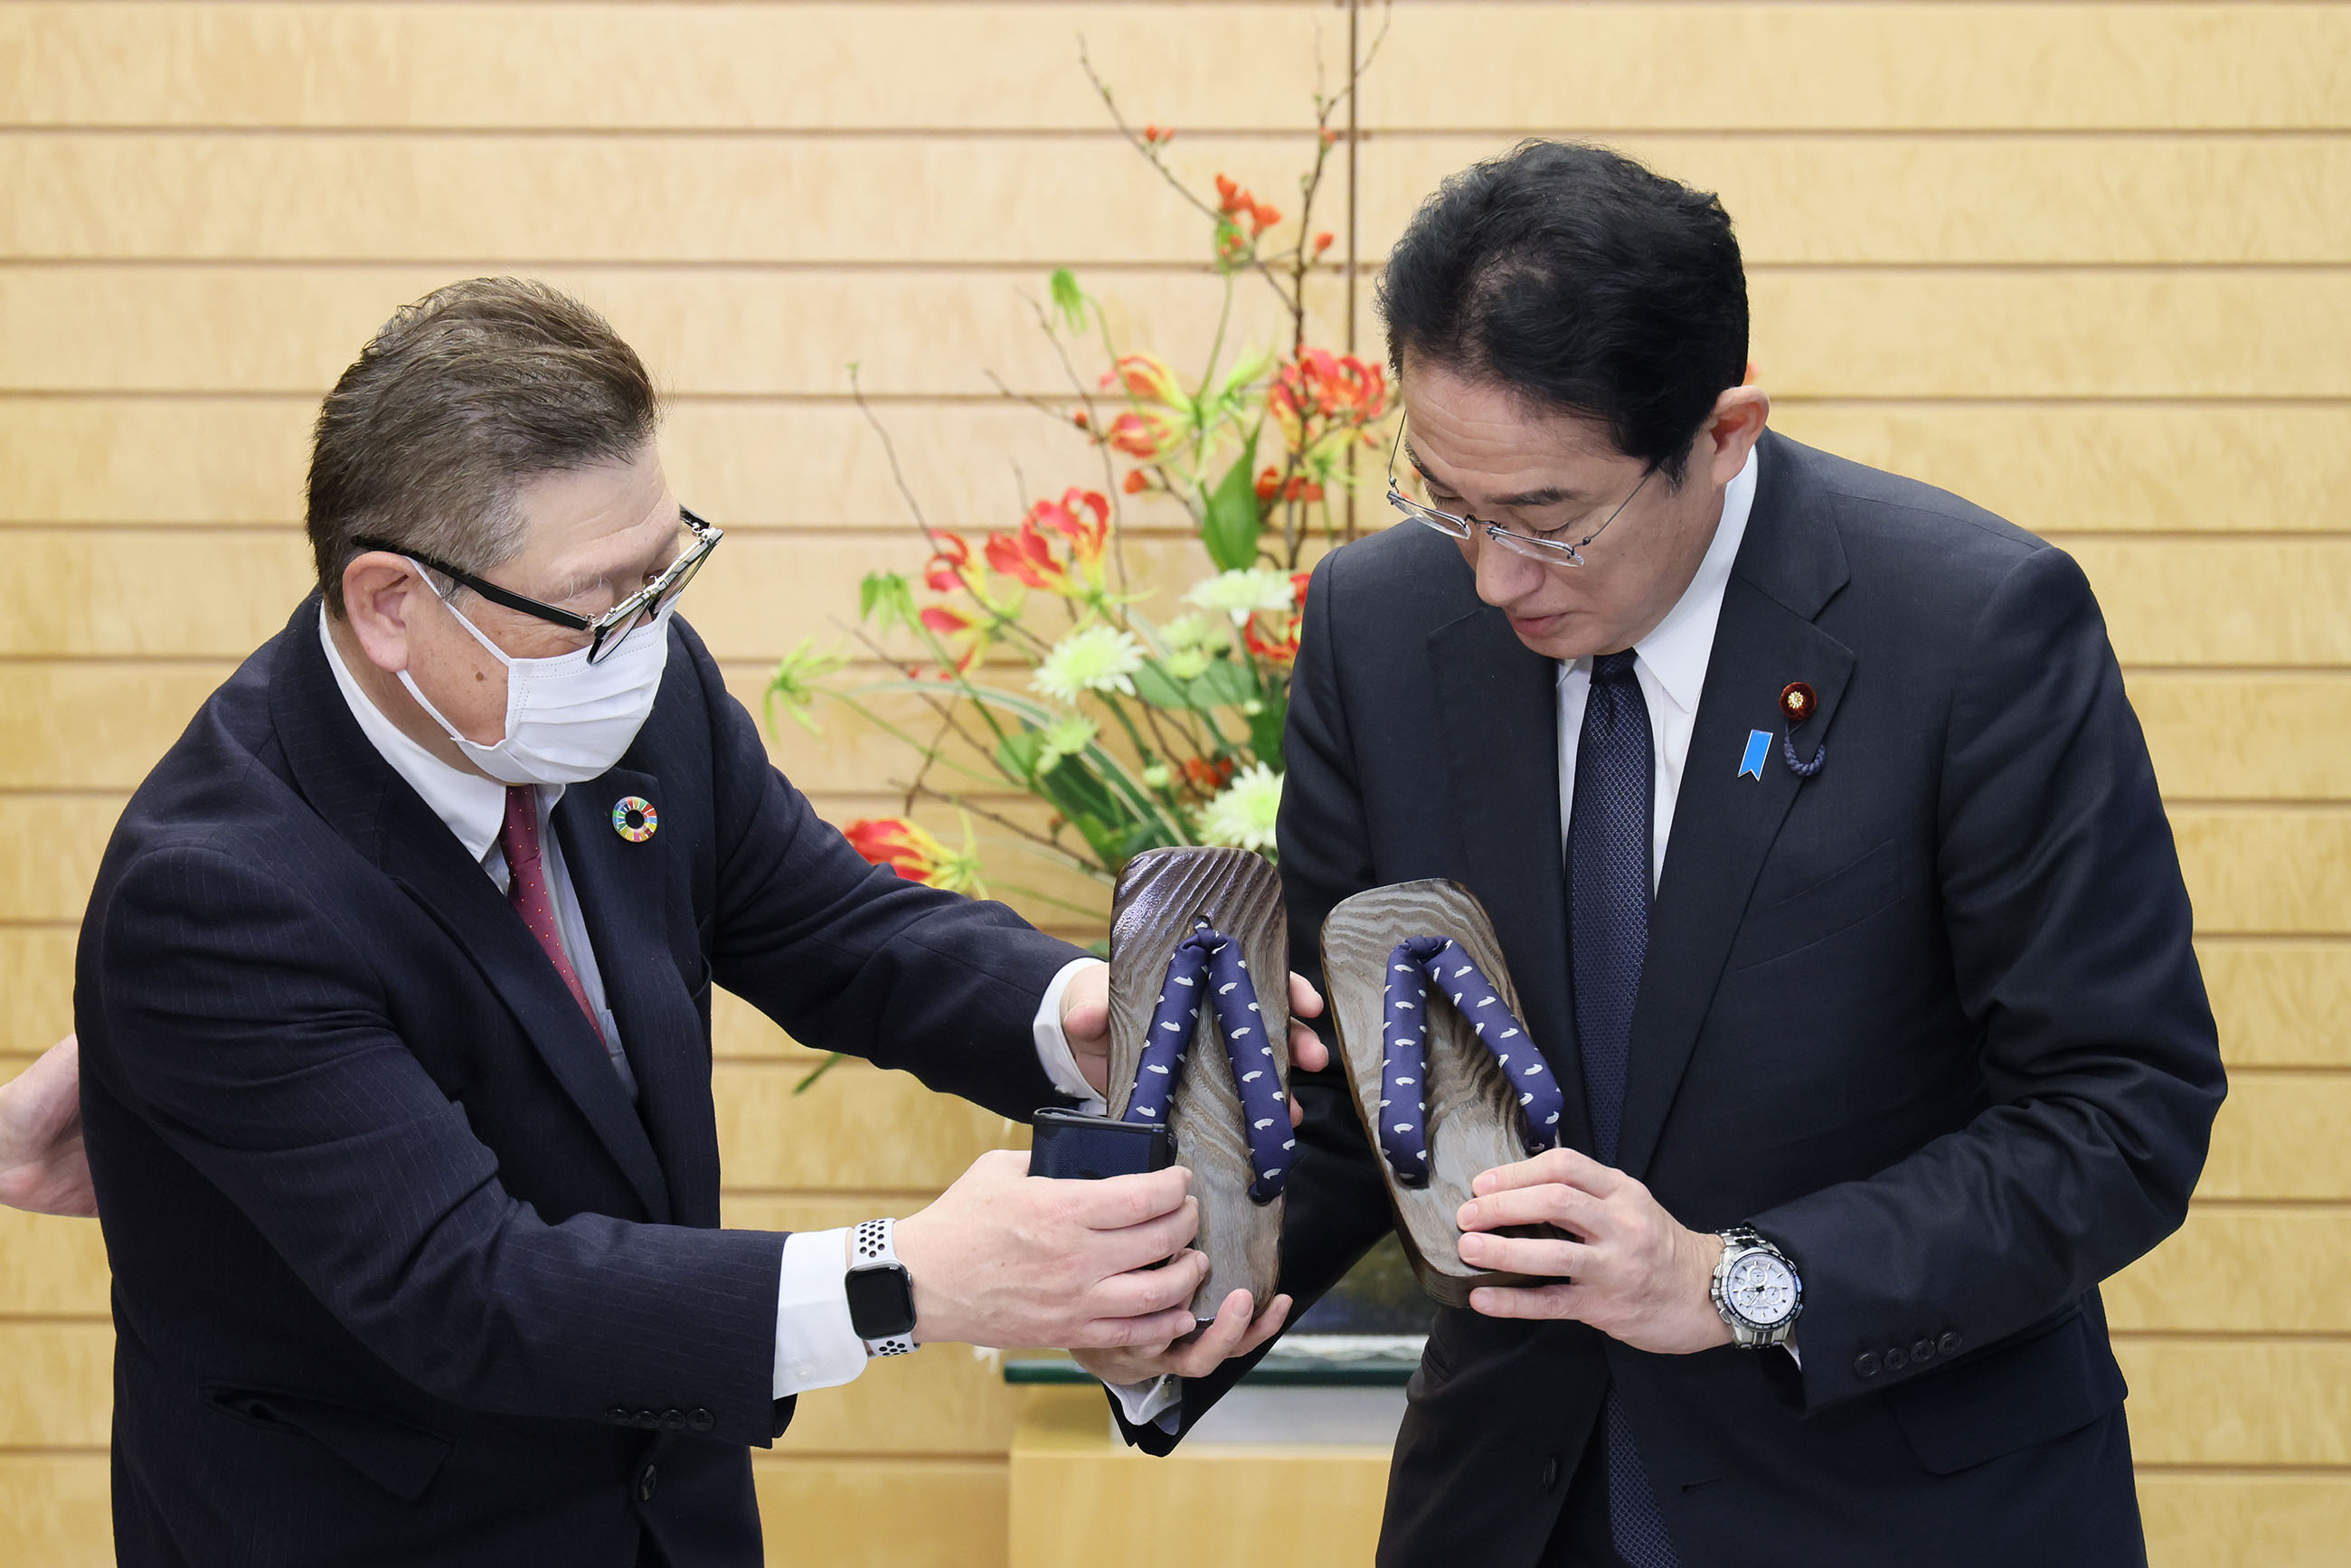 Prime Minister Kishida receiving geta sandals made from repurposed neckties (2)